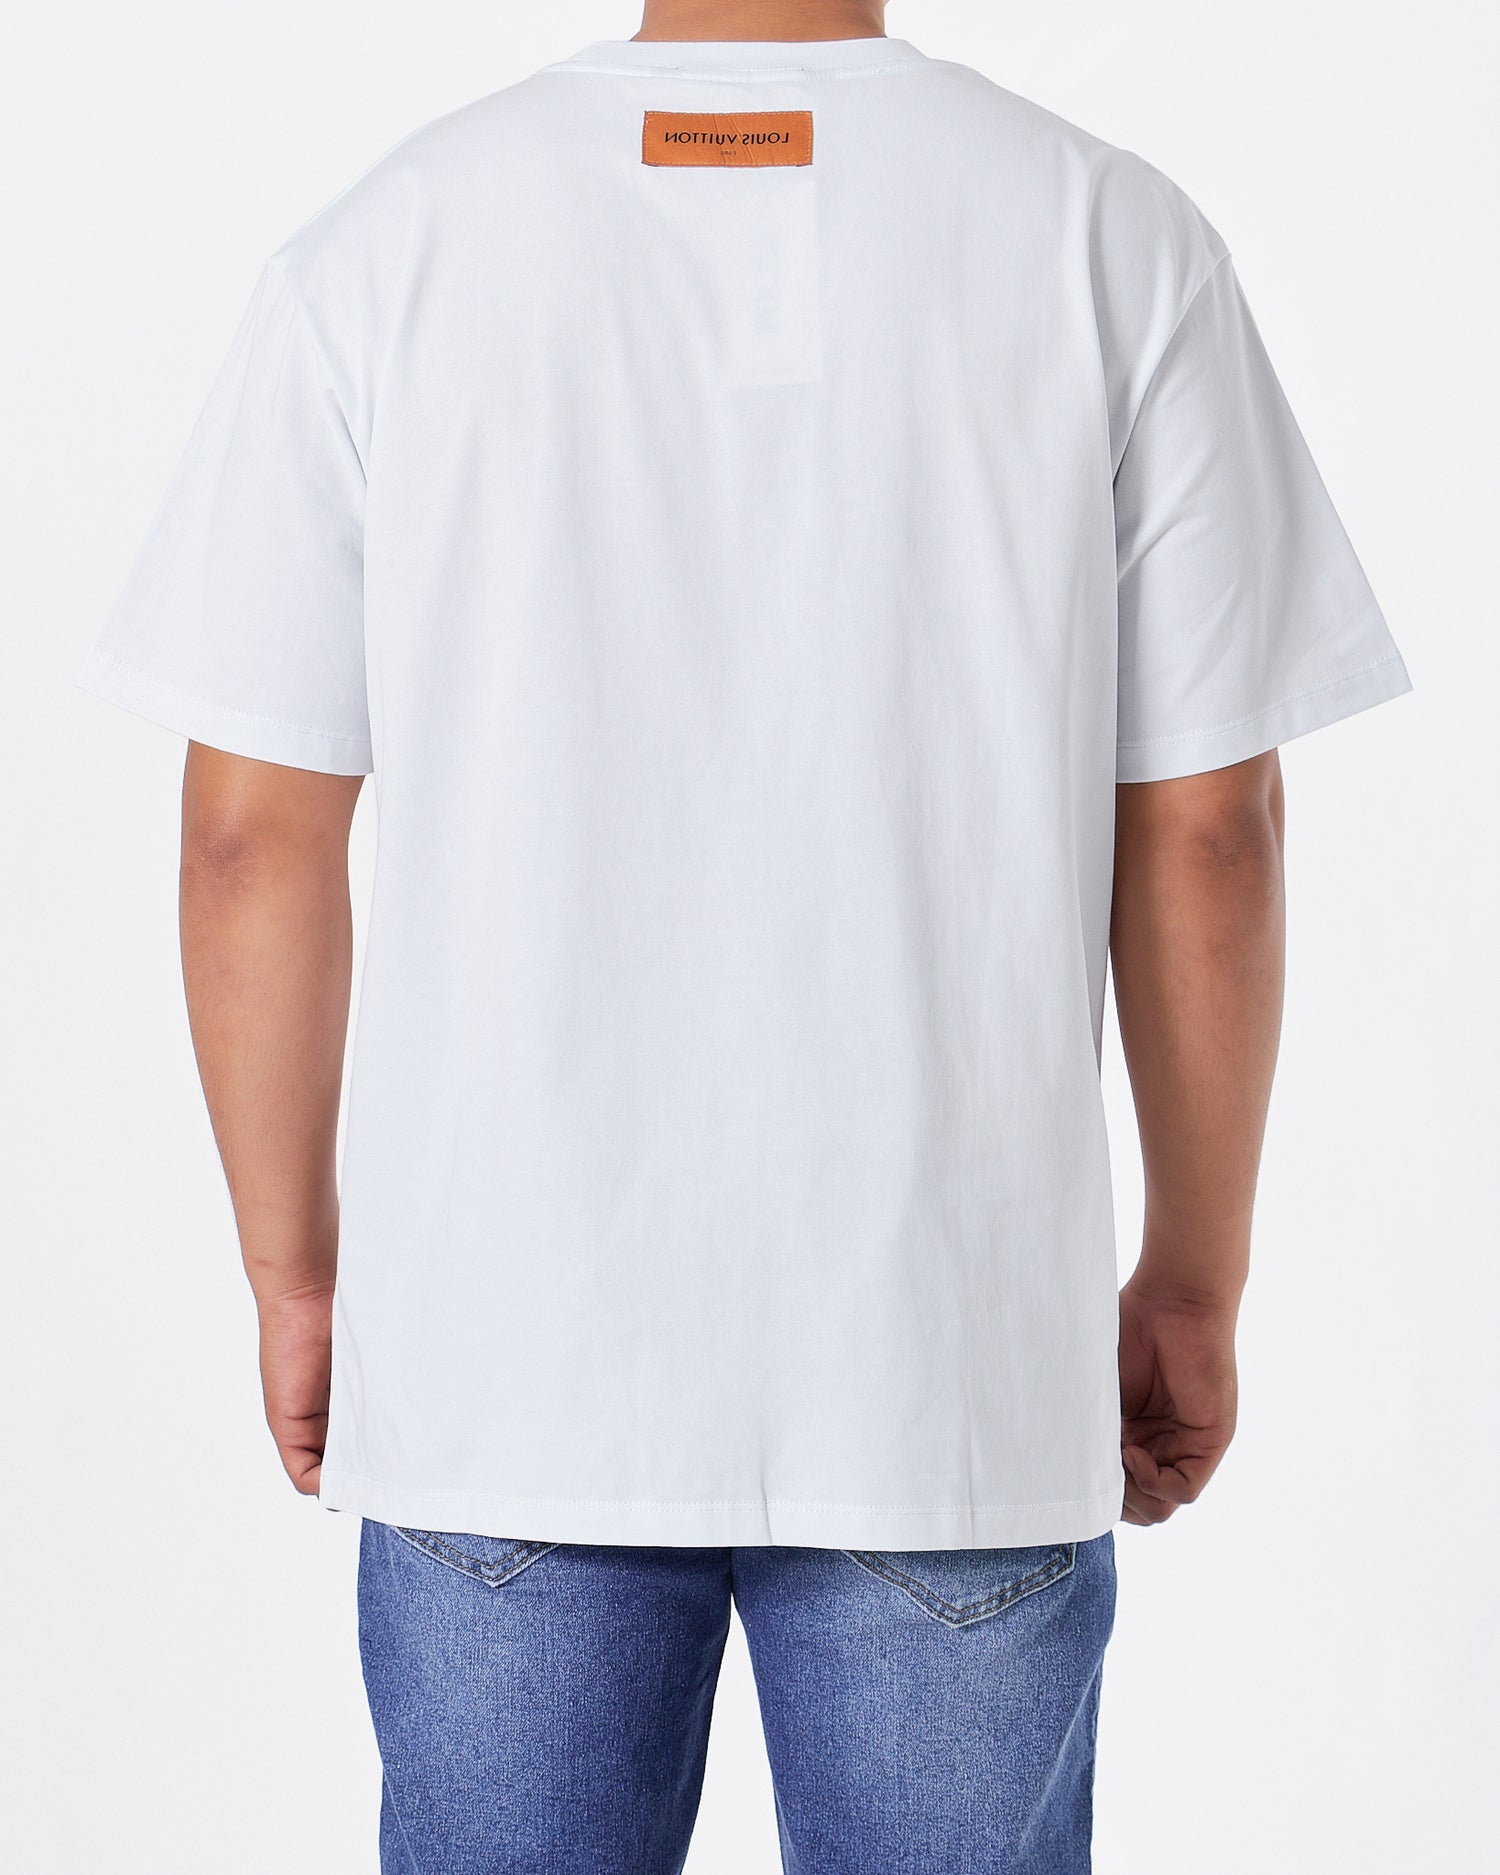 LV Color Drip Men White T-Shirt 24.90